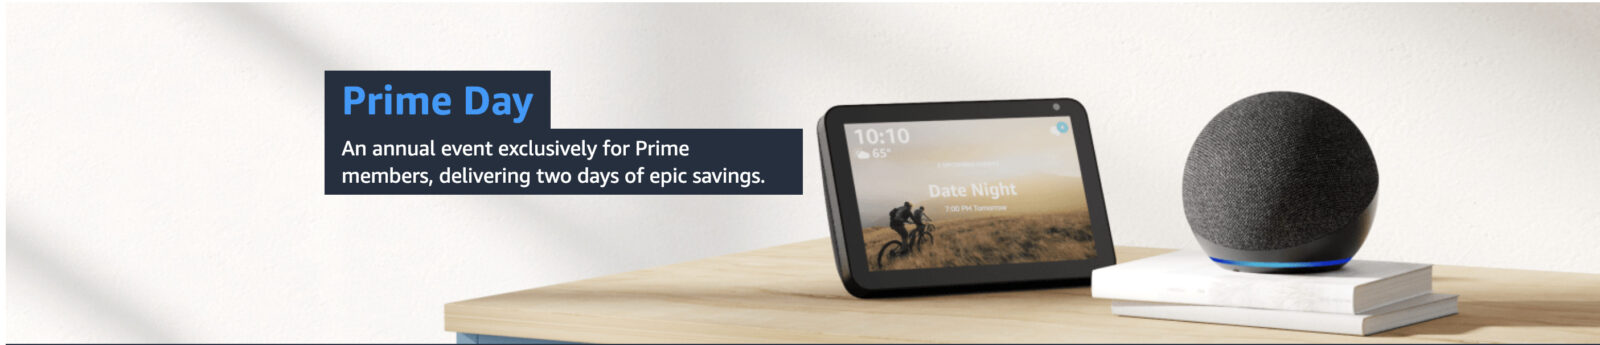 Как получить значок Prime Amazon?